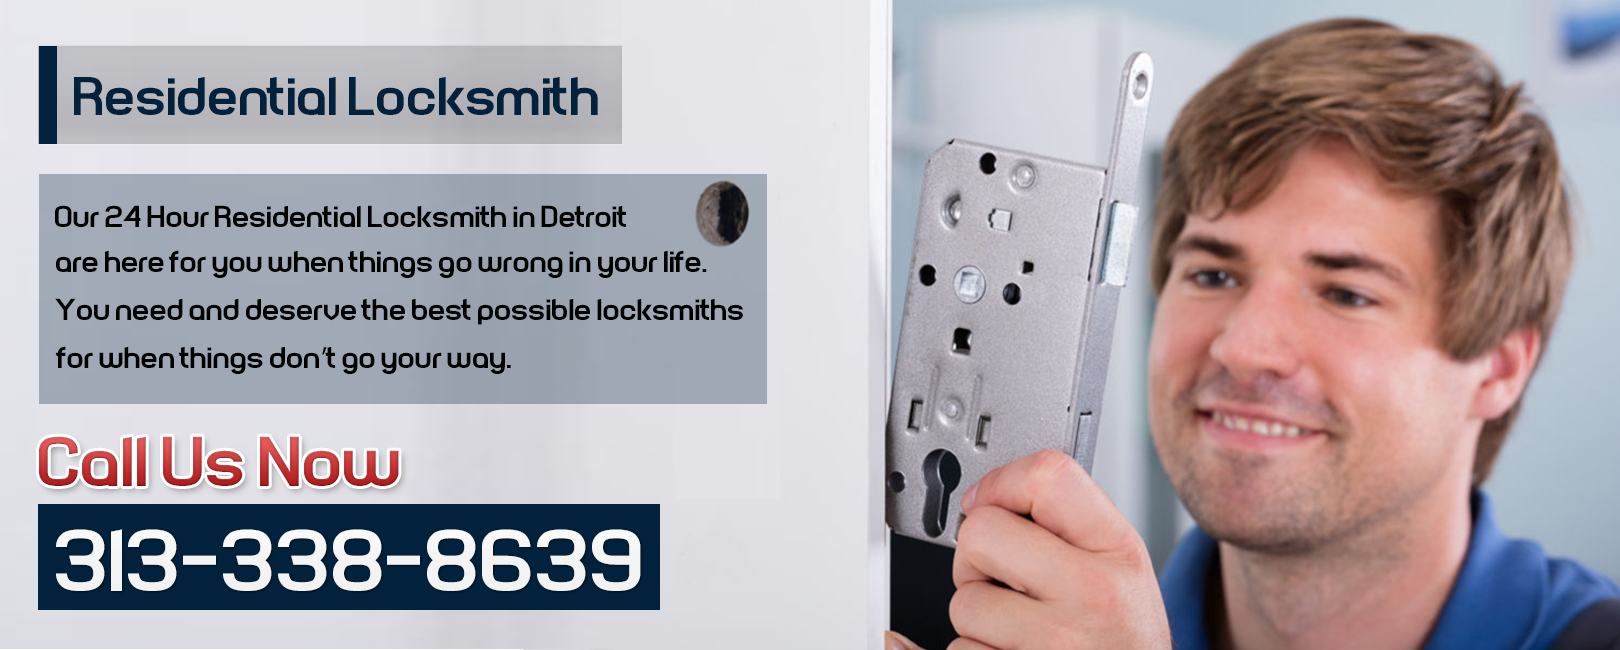 Residential Locksmith Detroit MI